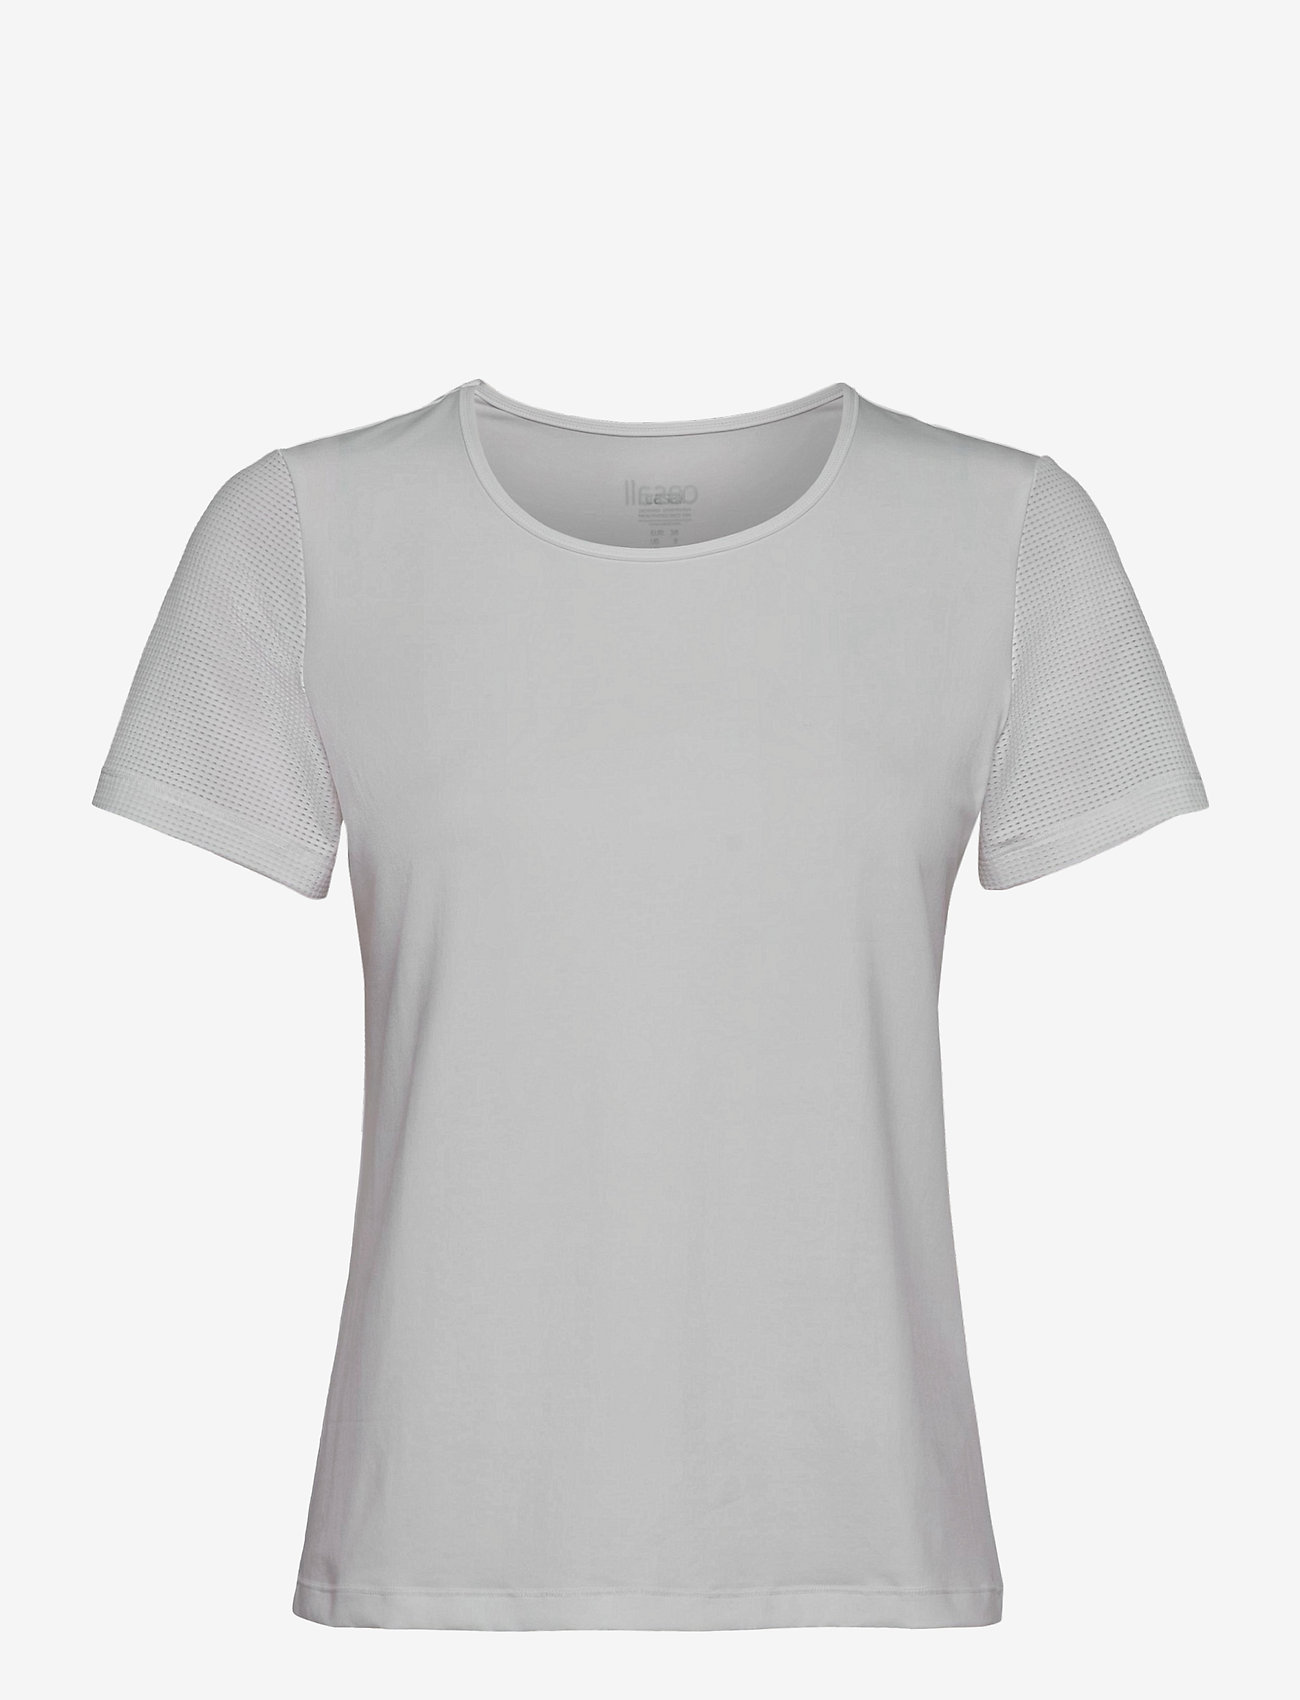 Casall - Essential Mesh Detail Tee - t-skjorter - white - 1